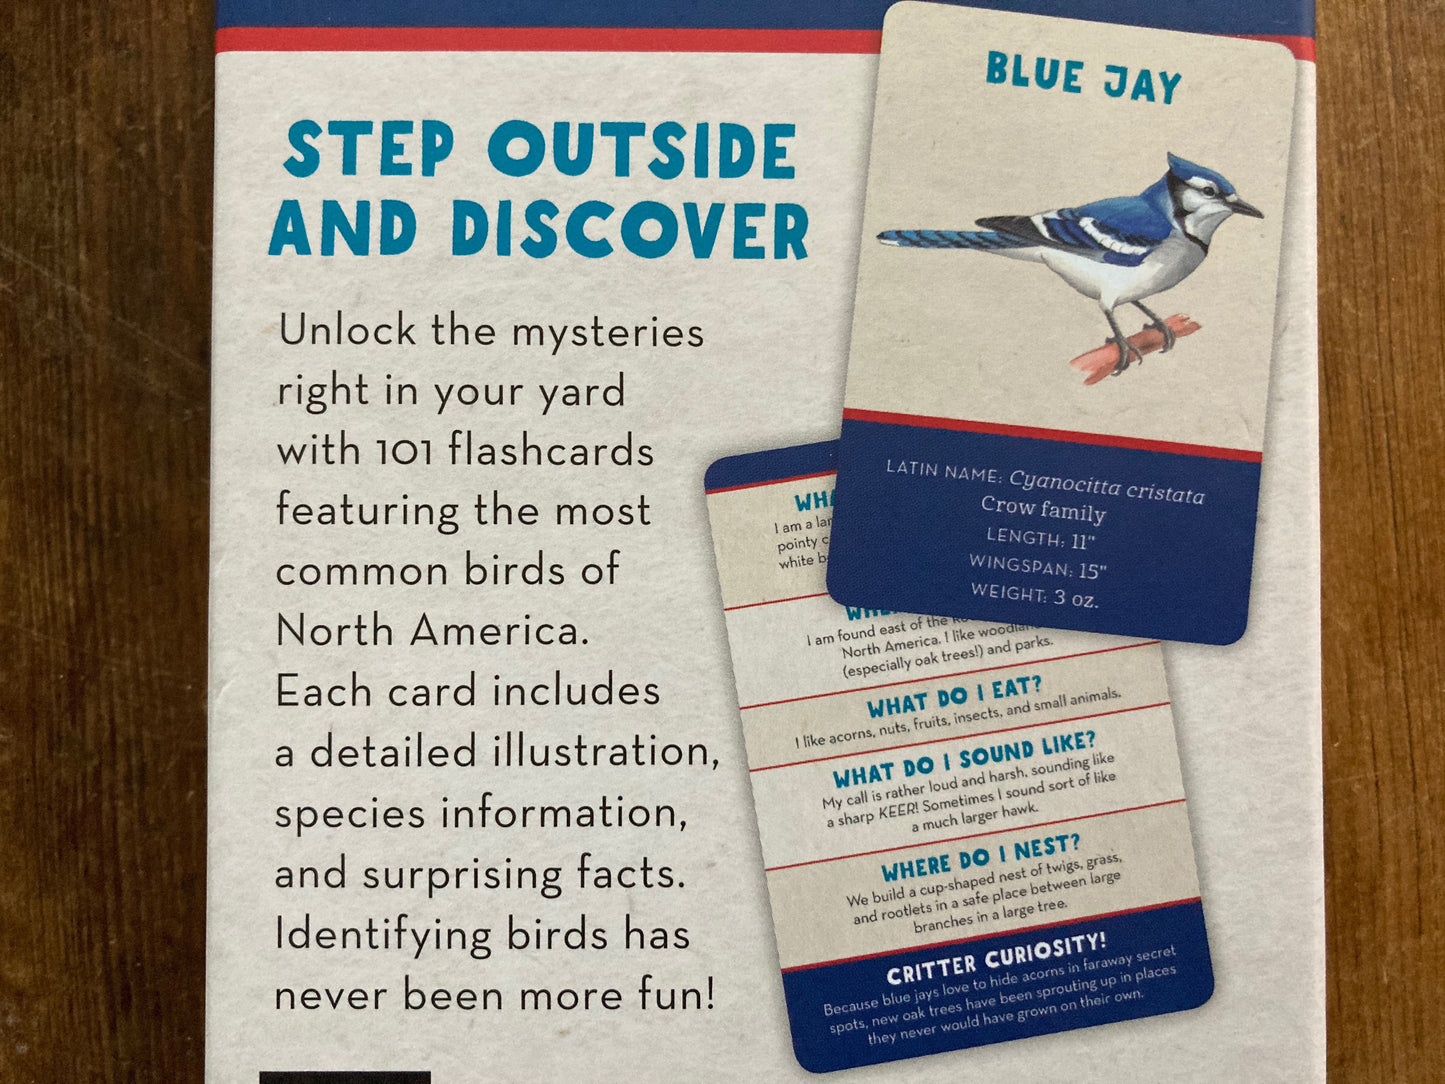 Educational Reference Card Set - BACKYARD BIRDS